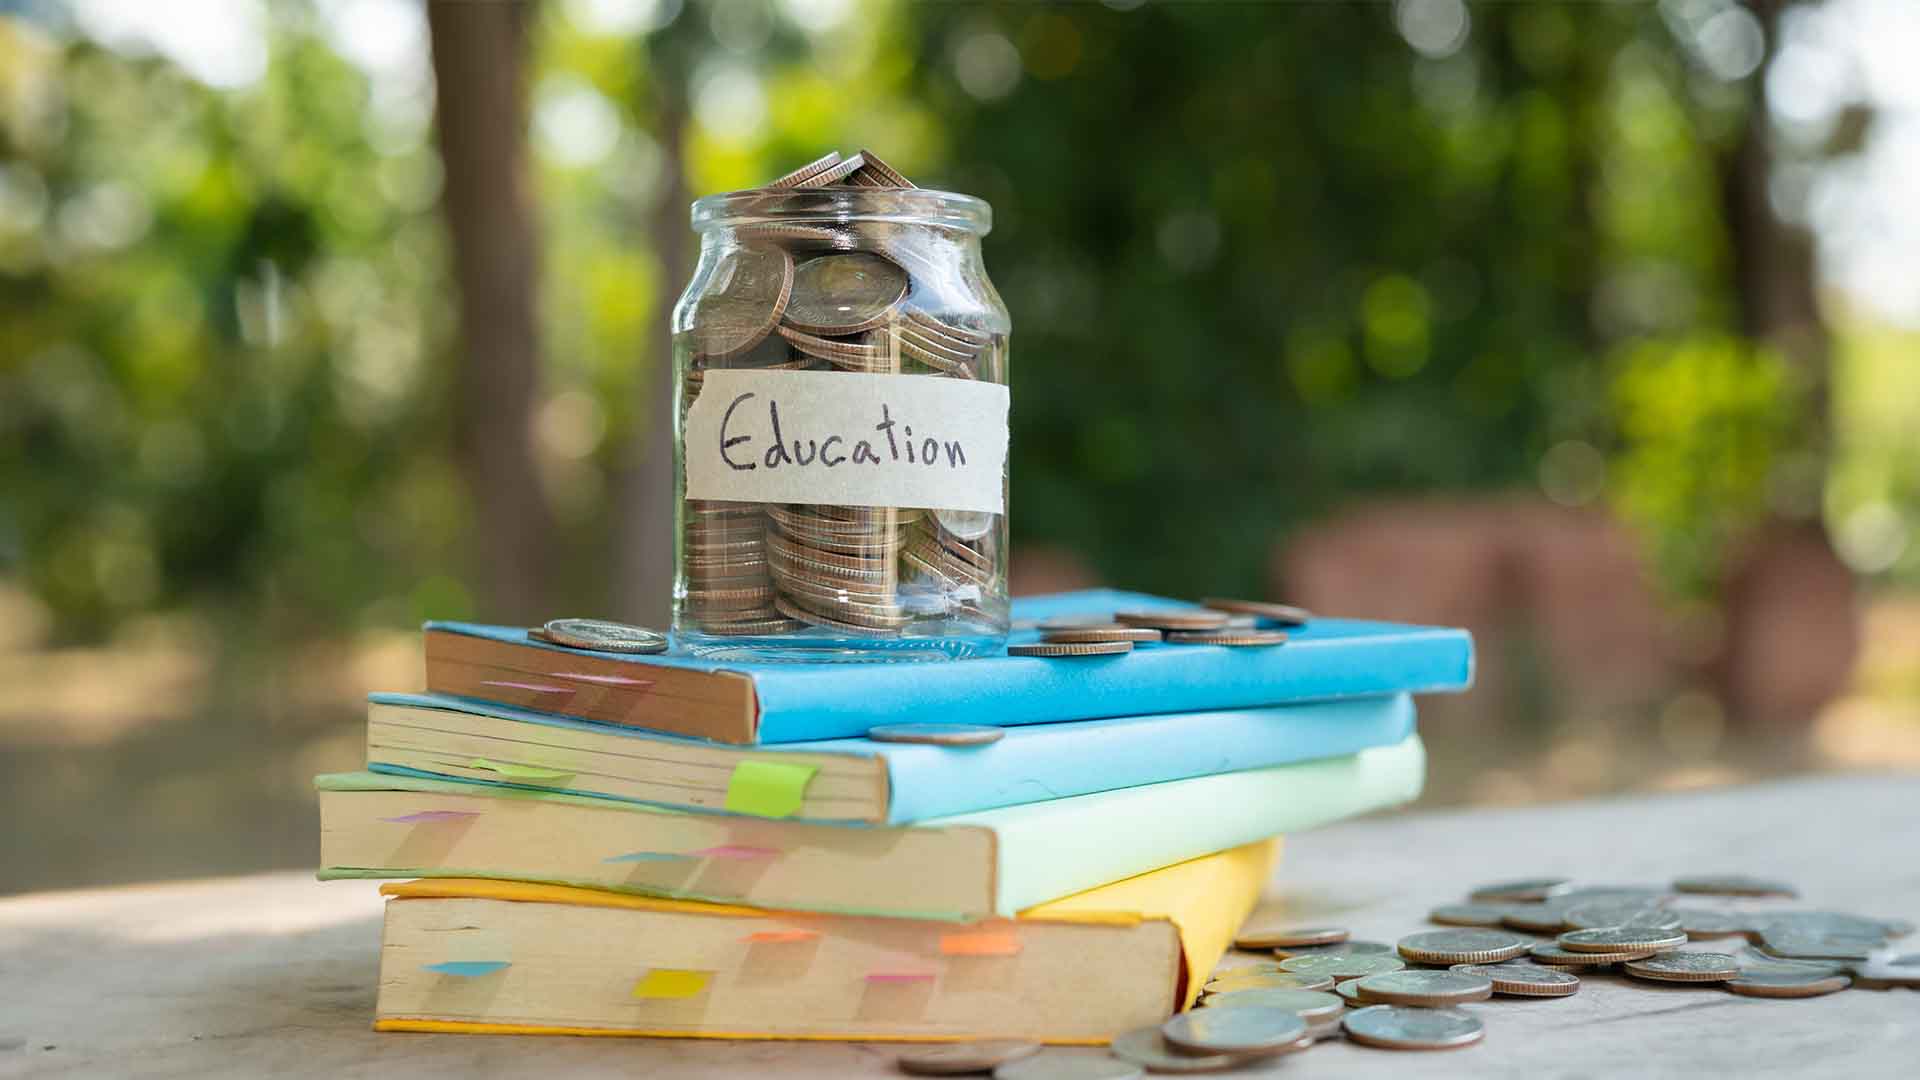 money jar of education on the books